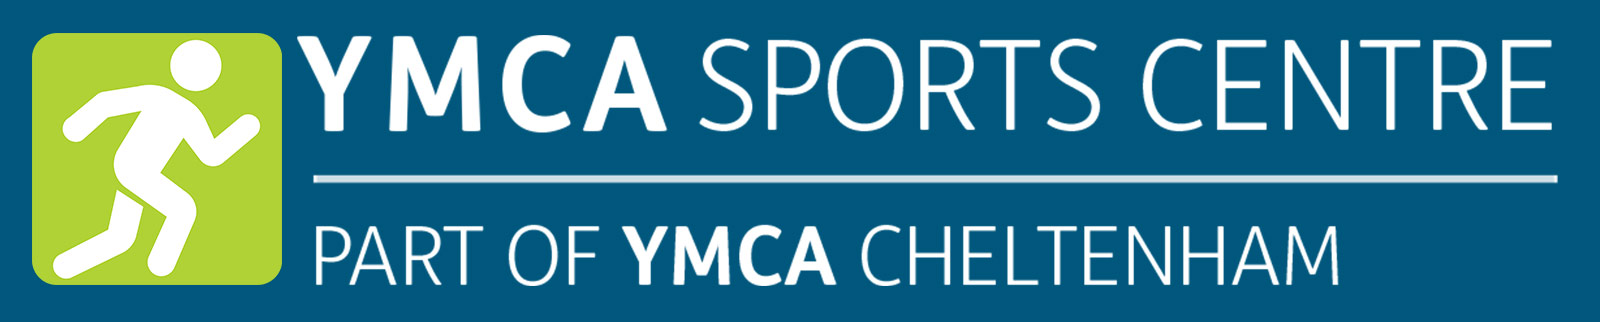 YMCA Cheltenham Sports Centre Header Image